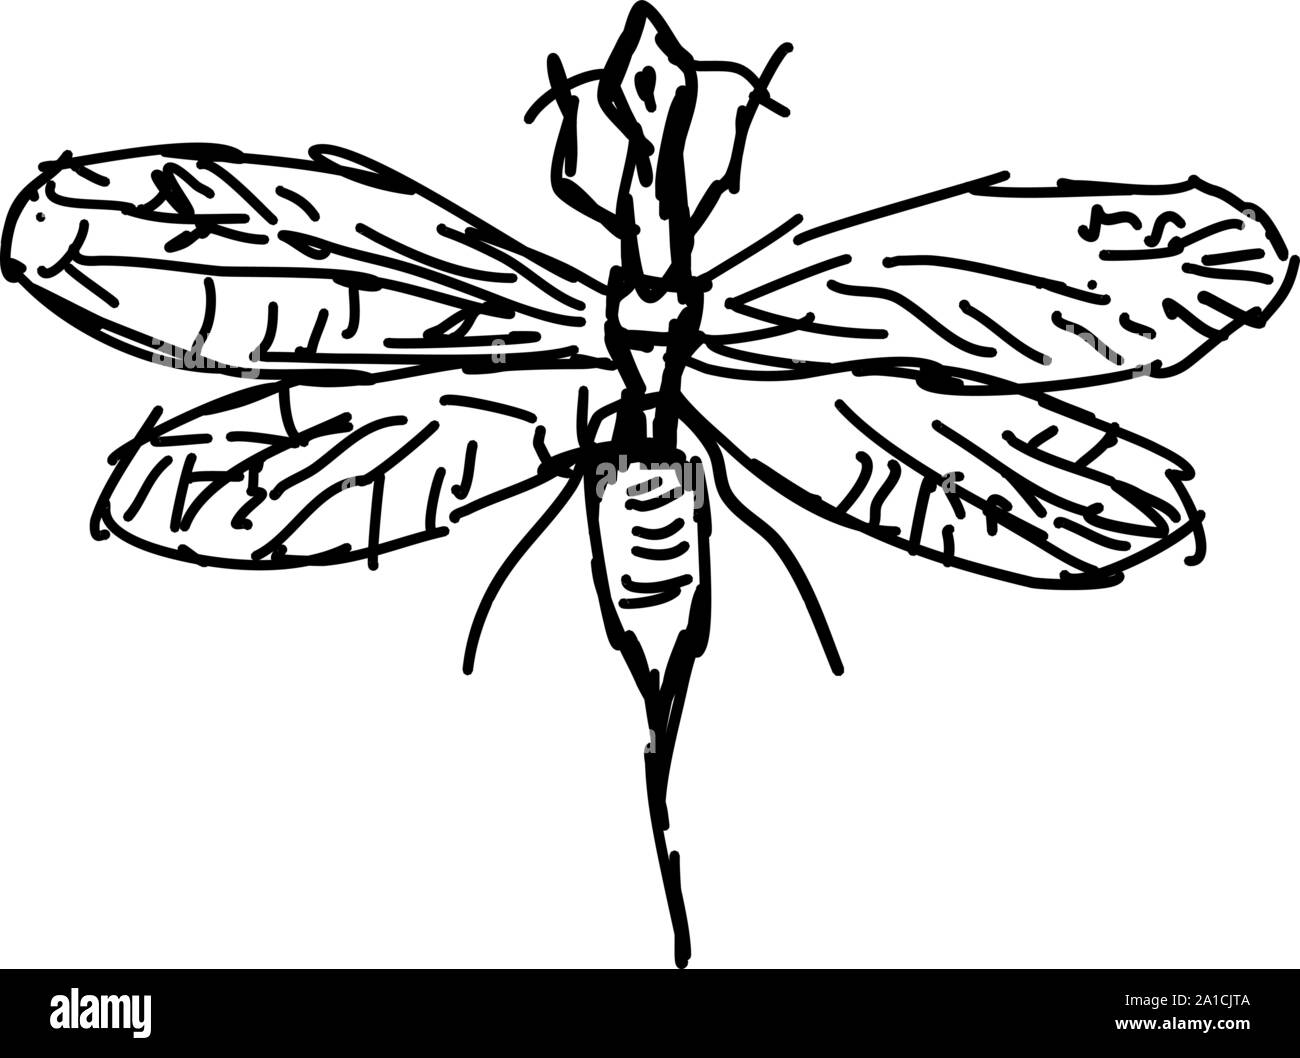 Snakefly drawing, illustration, vector on white background. Stock Vector